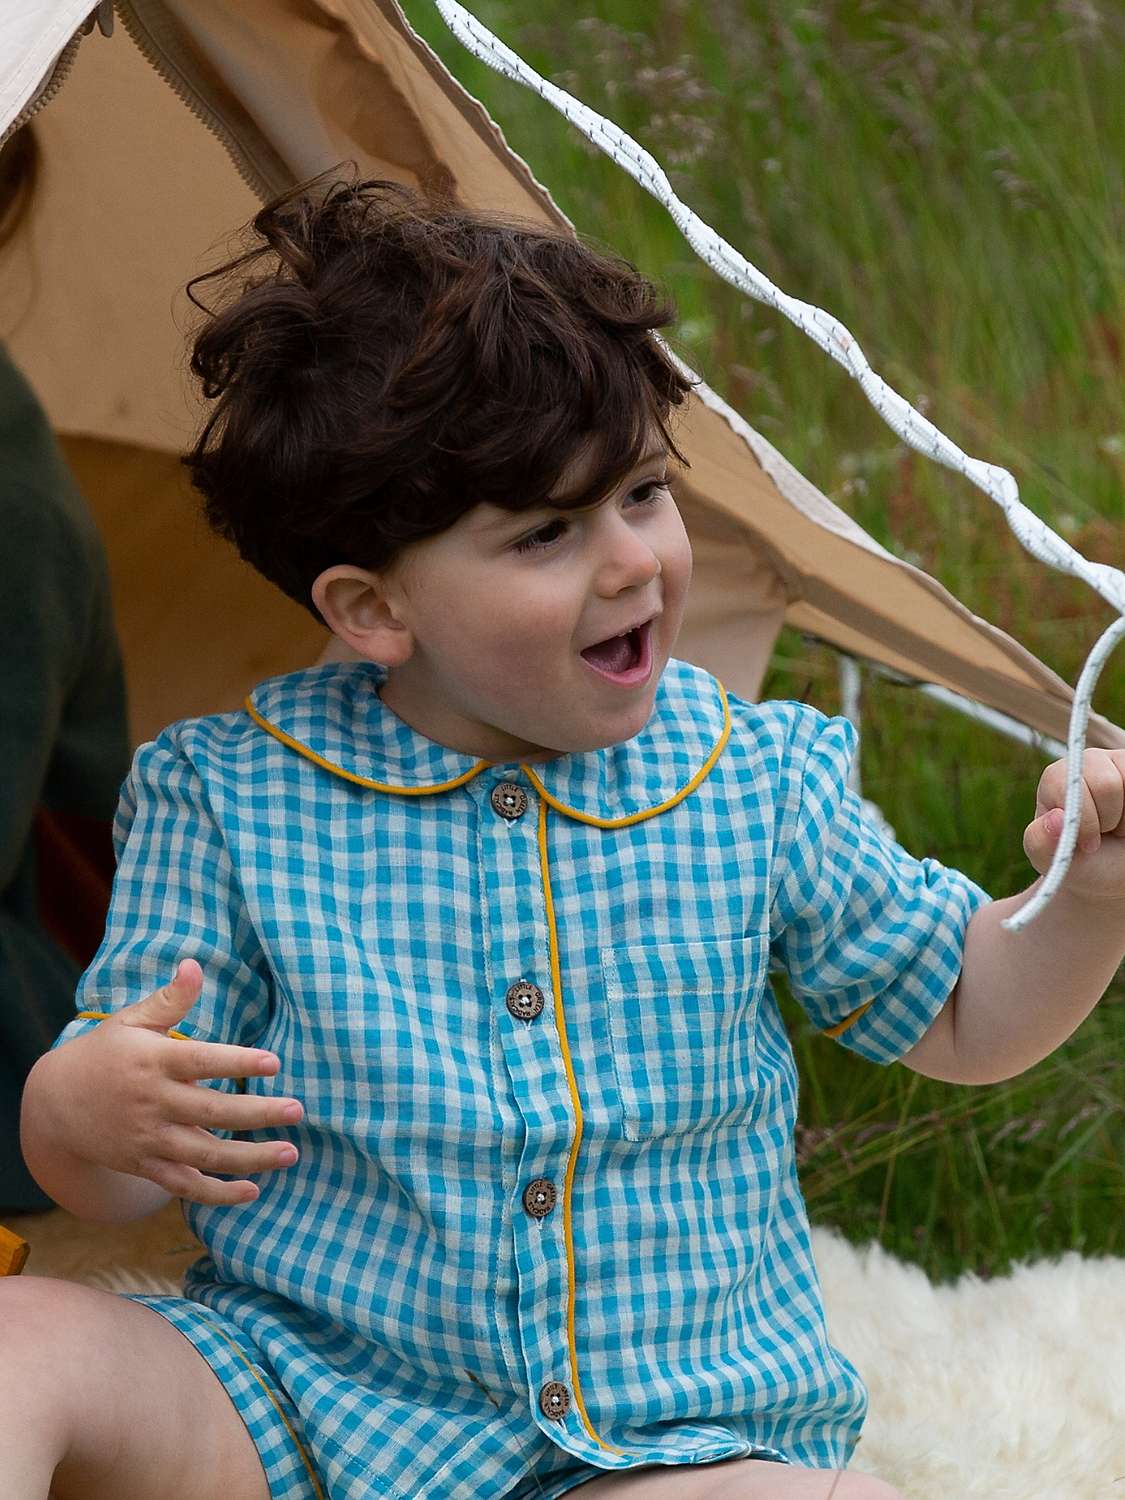 Buy Little Green Radicals Kids' Button Pyjama Set, Blue Online at johnlewis.com